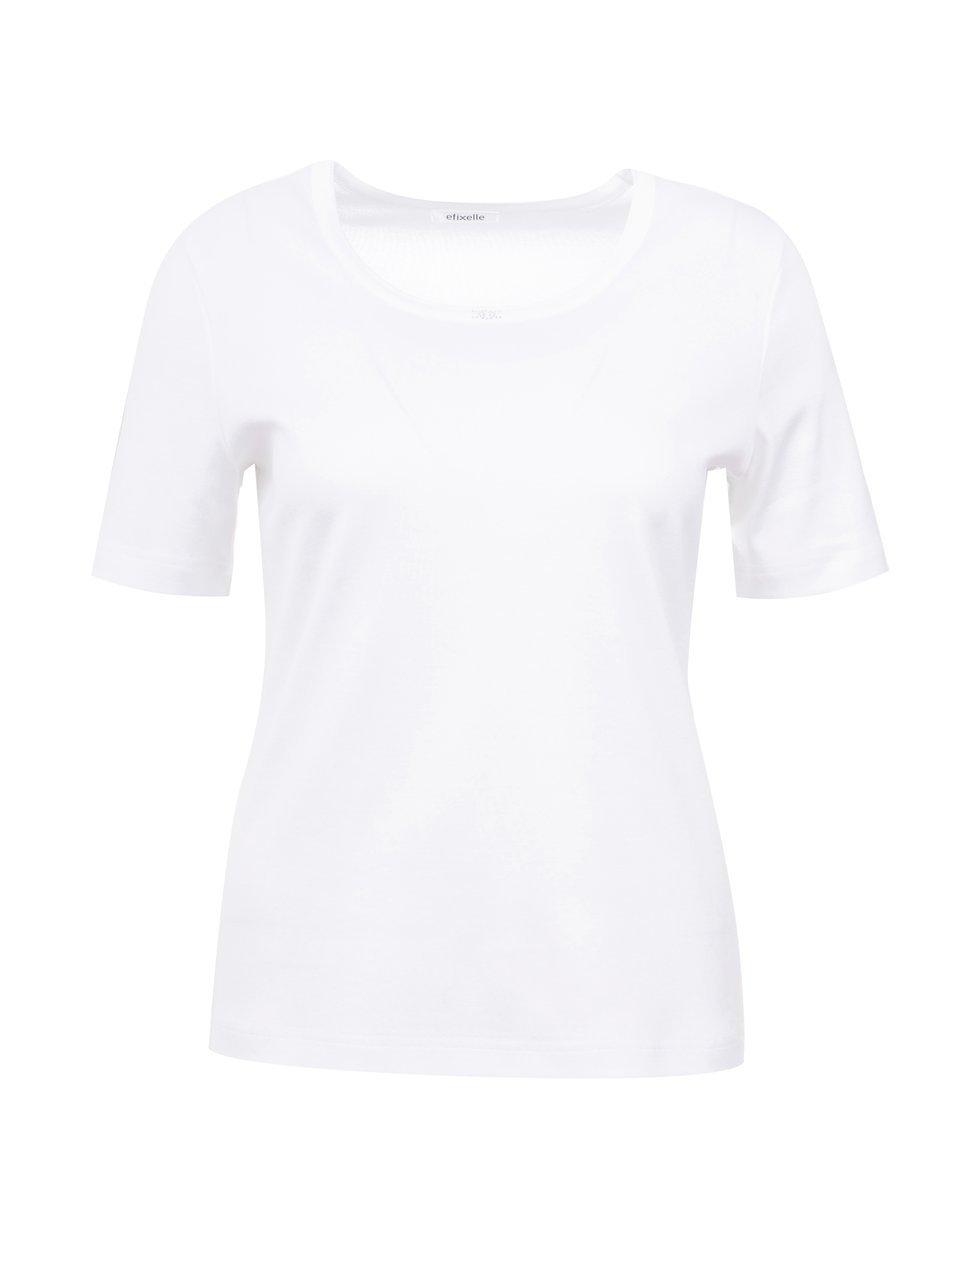 Shirt Van Efixelle wit